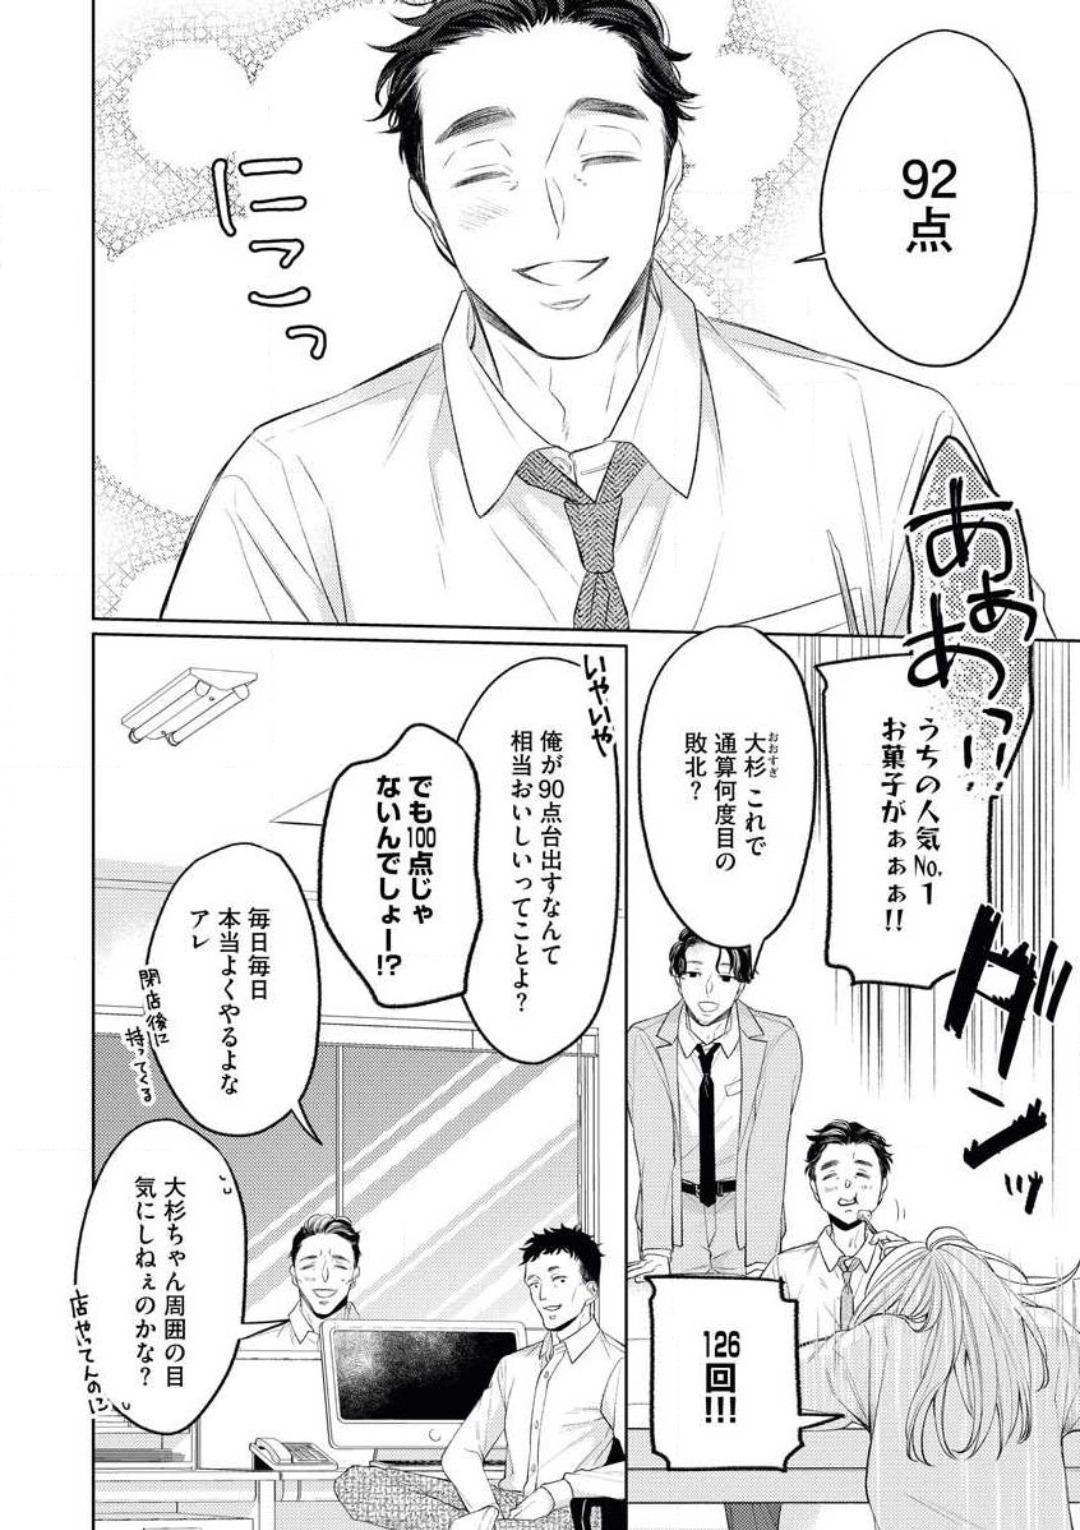 Nalgas Yakuza no Kakehiki wa Ijiwaru ni Amai Load - Page 5